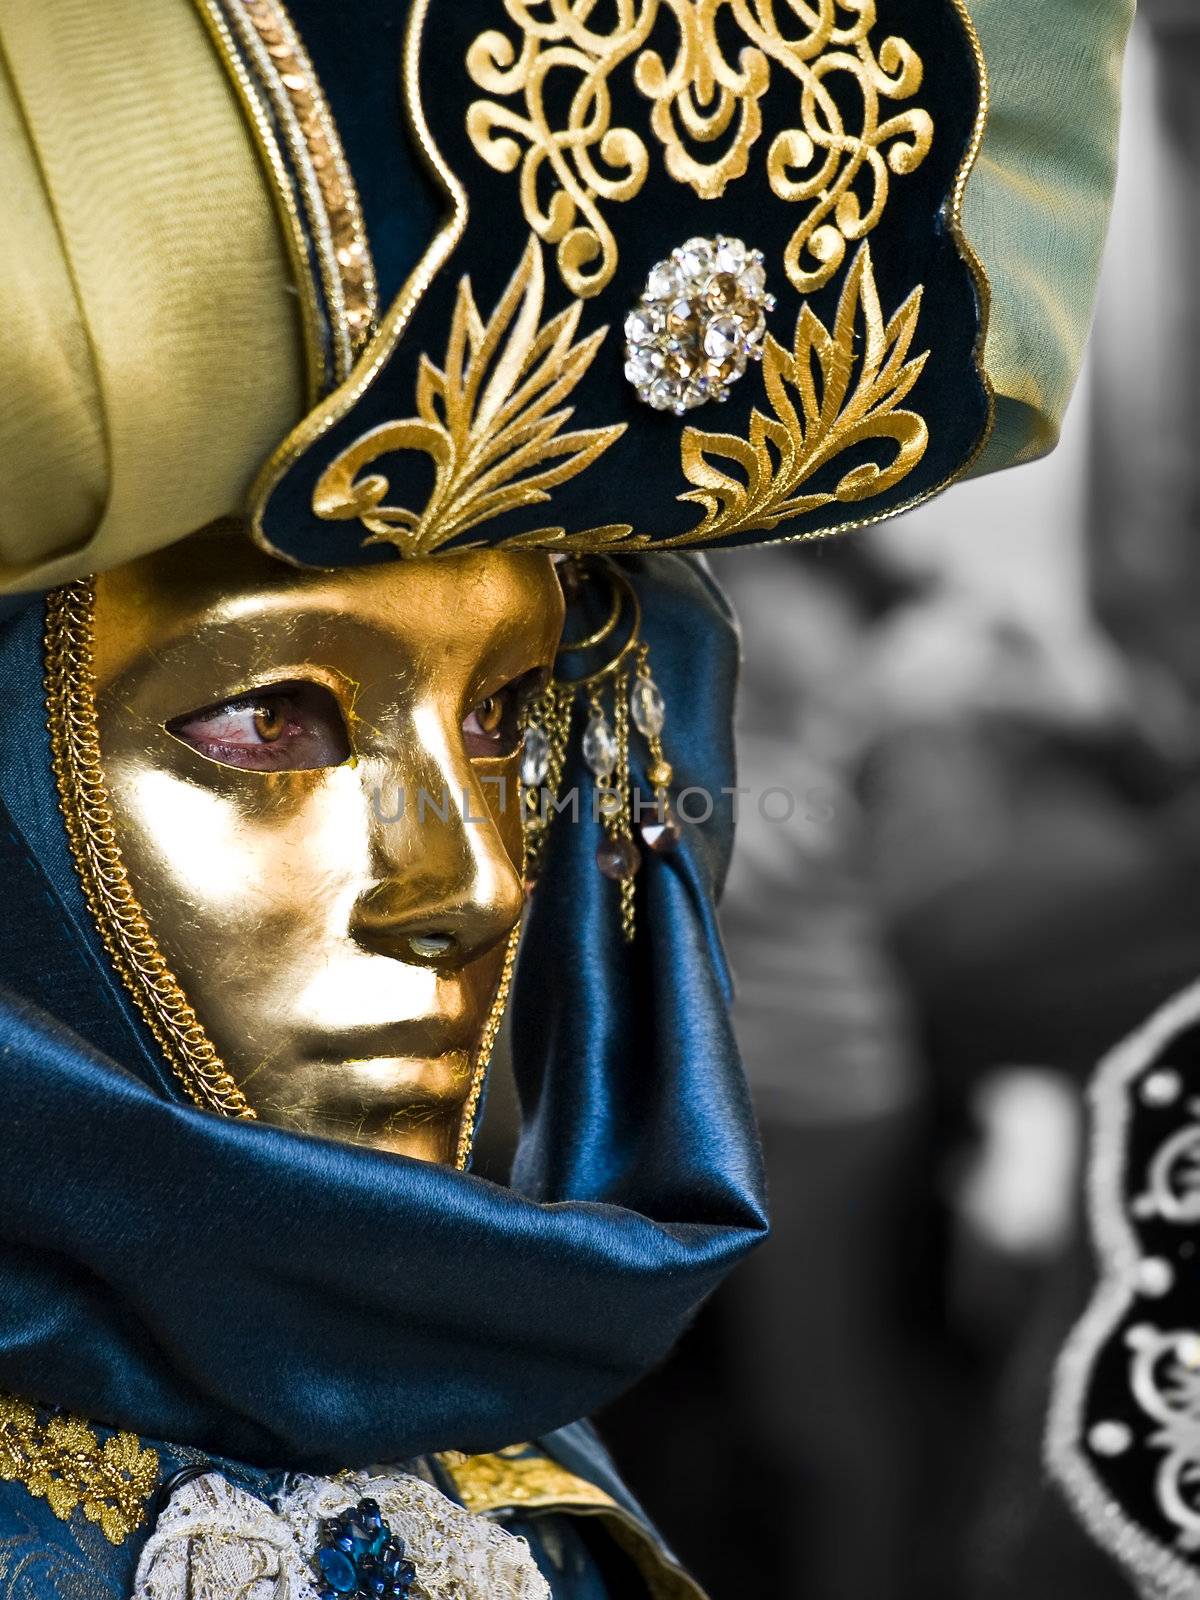 VALLETTA, MALTA - Feb 21st 2009 - Woman wearing beautiful Venetian style masks and costumes at the International Carnival of Malta 2009